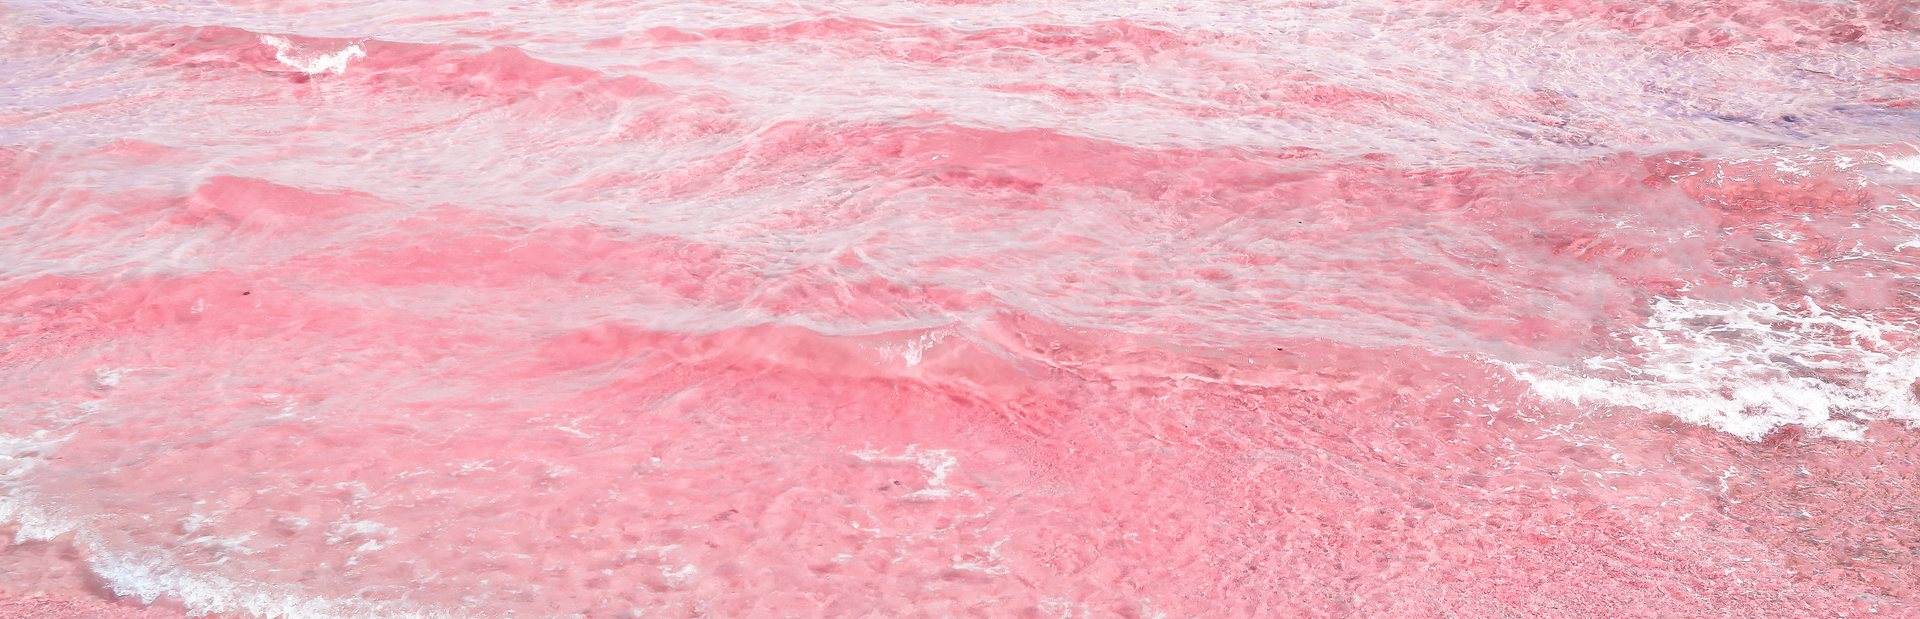 Pink Sand Beach Image 1